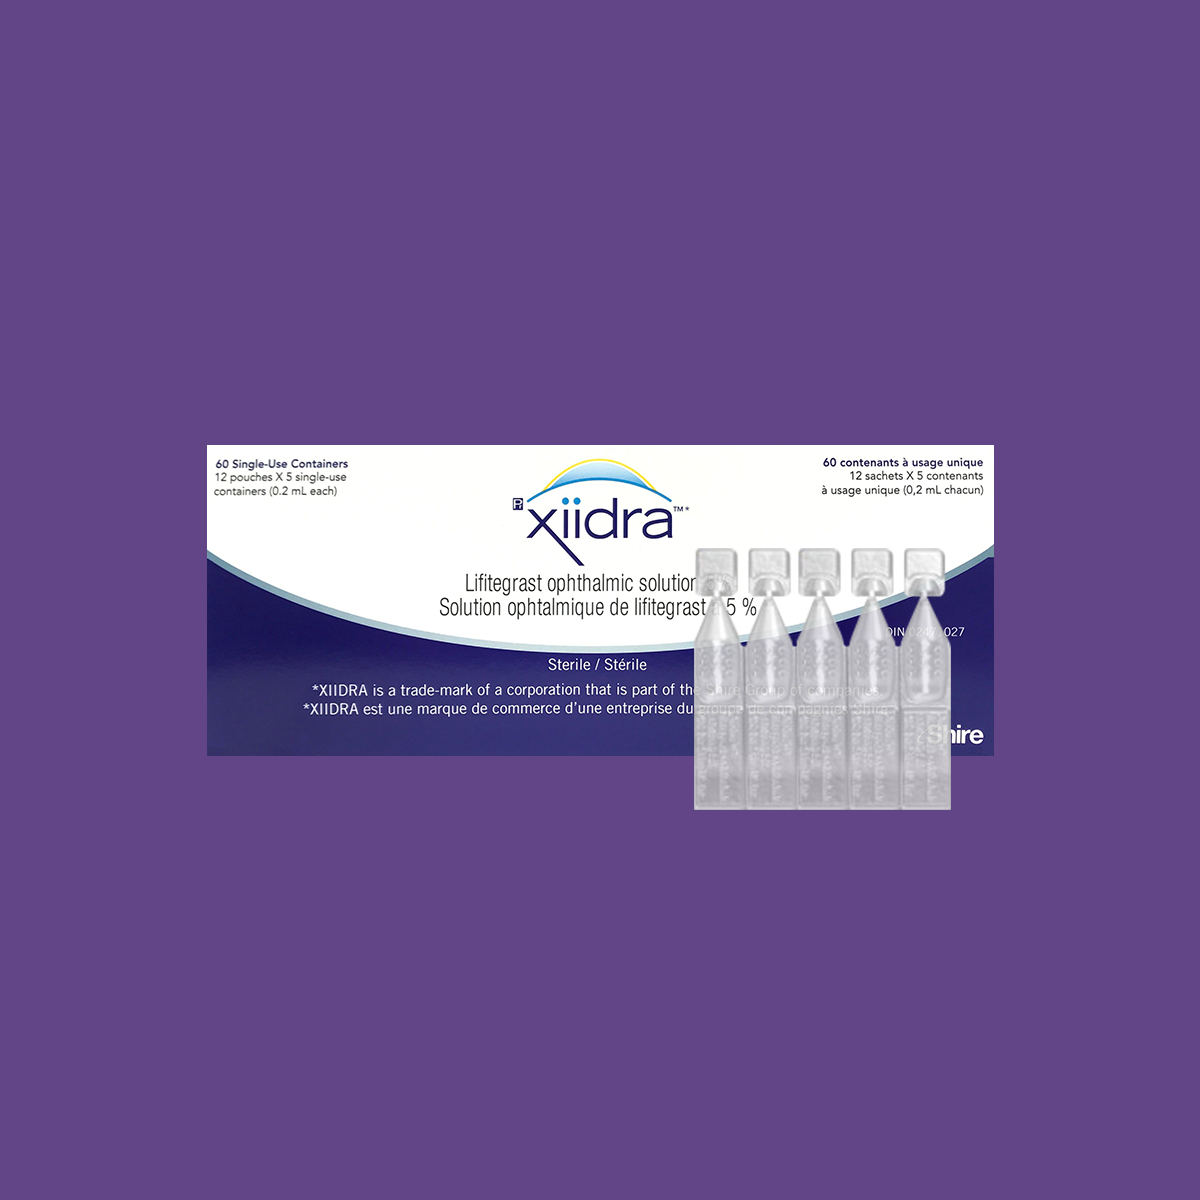 Xiidra® (lifitegrast ophthalmic solution) 5%